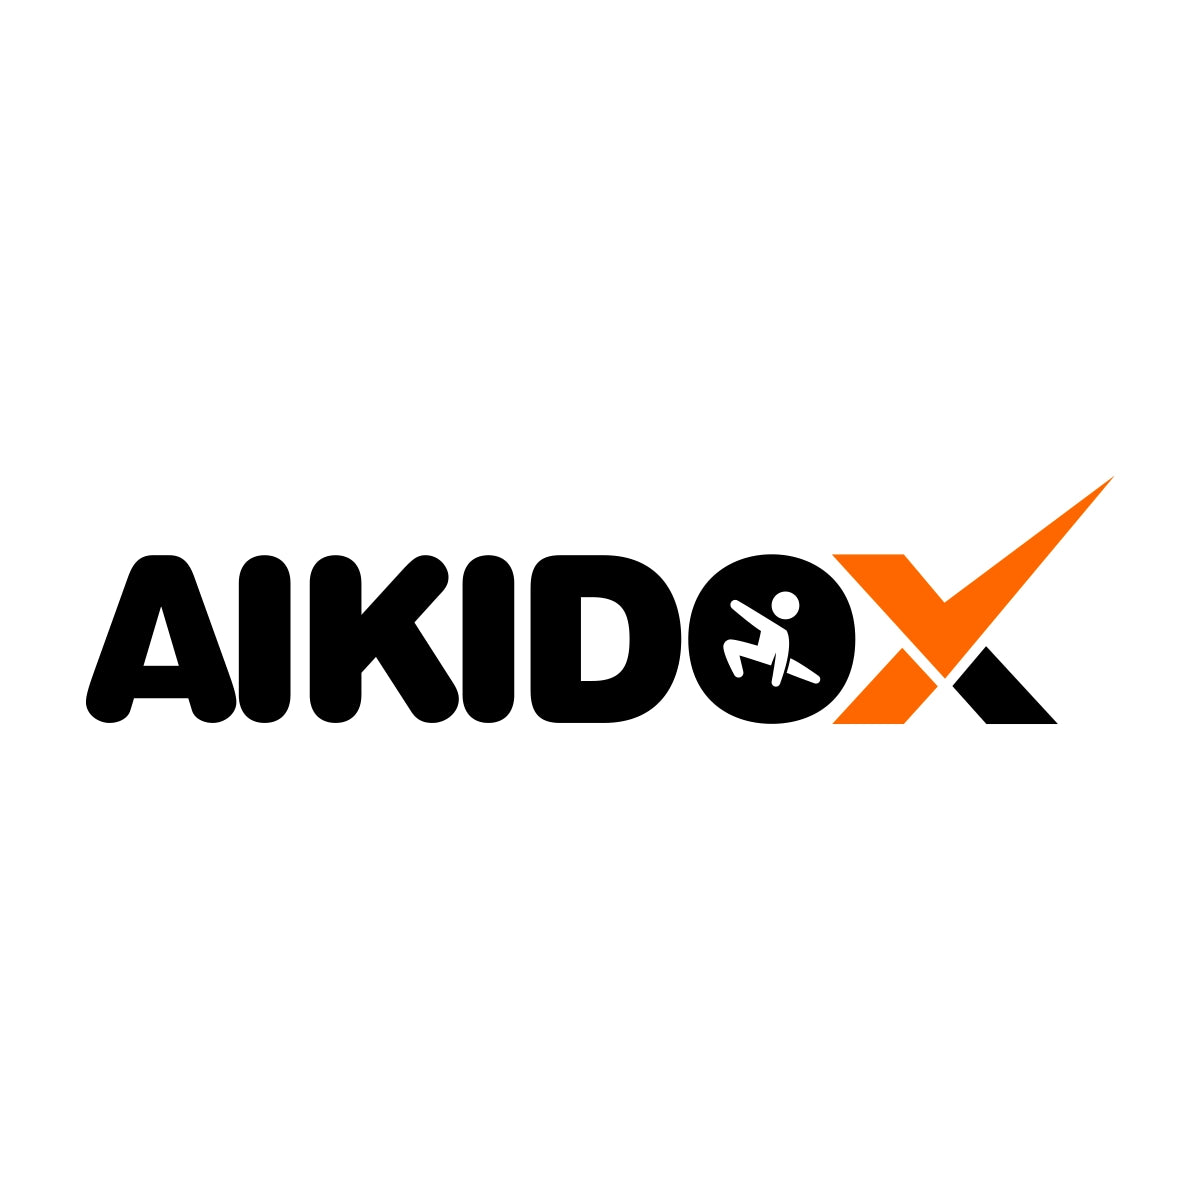 Aikidox.com